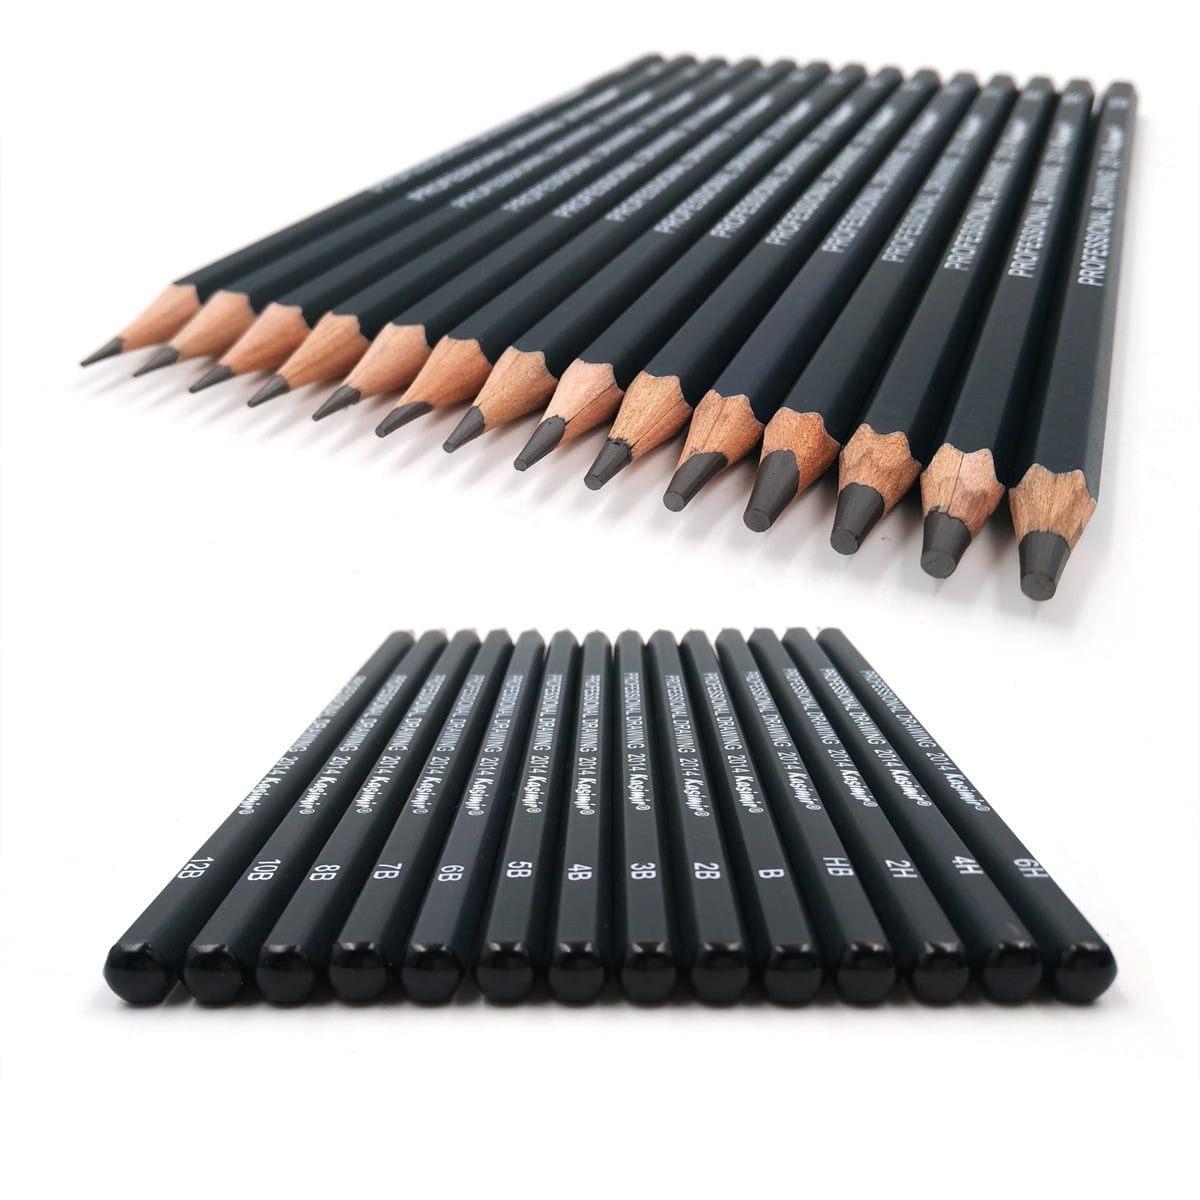 Best Quality 14/24pcs 6H-12B & 14B Drawing Charcoal Pencils Set